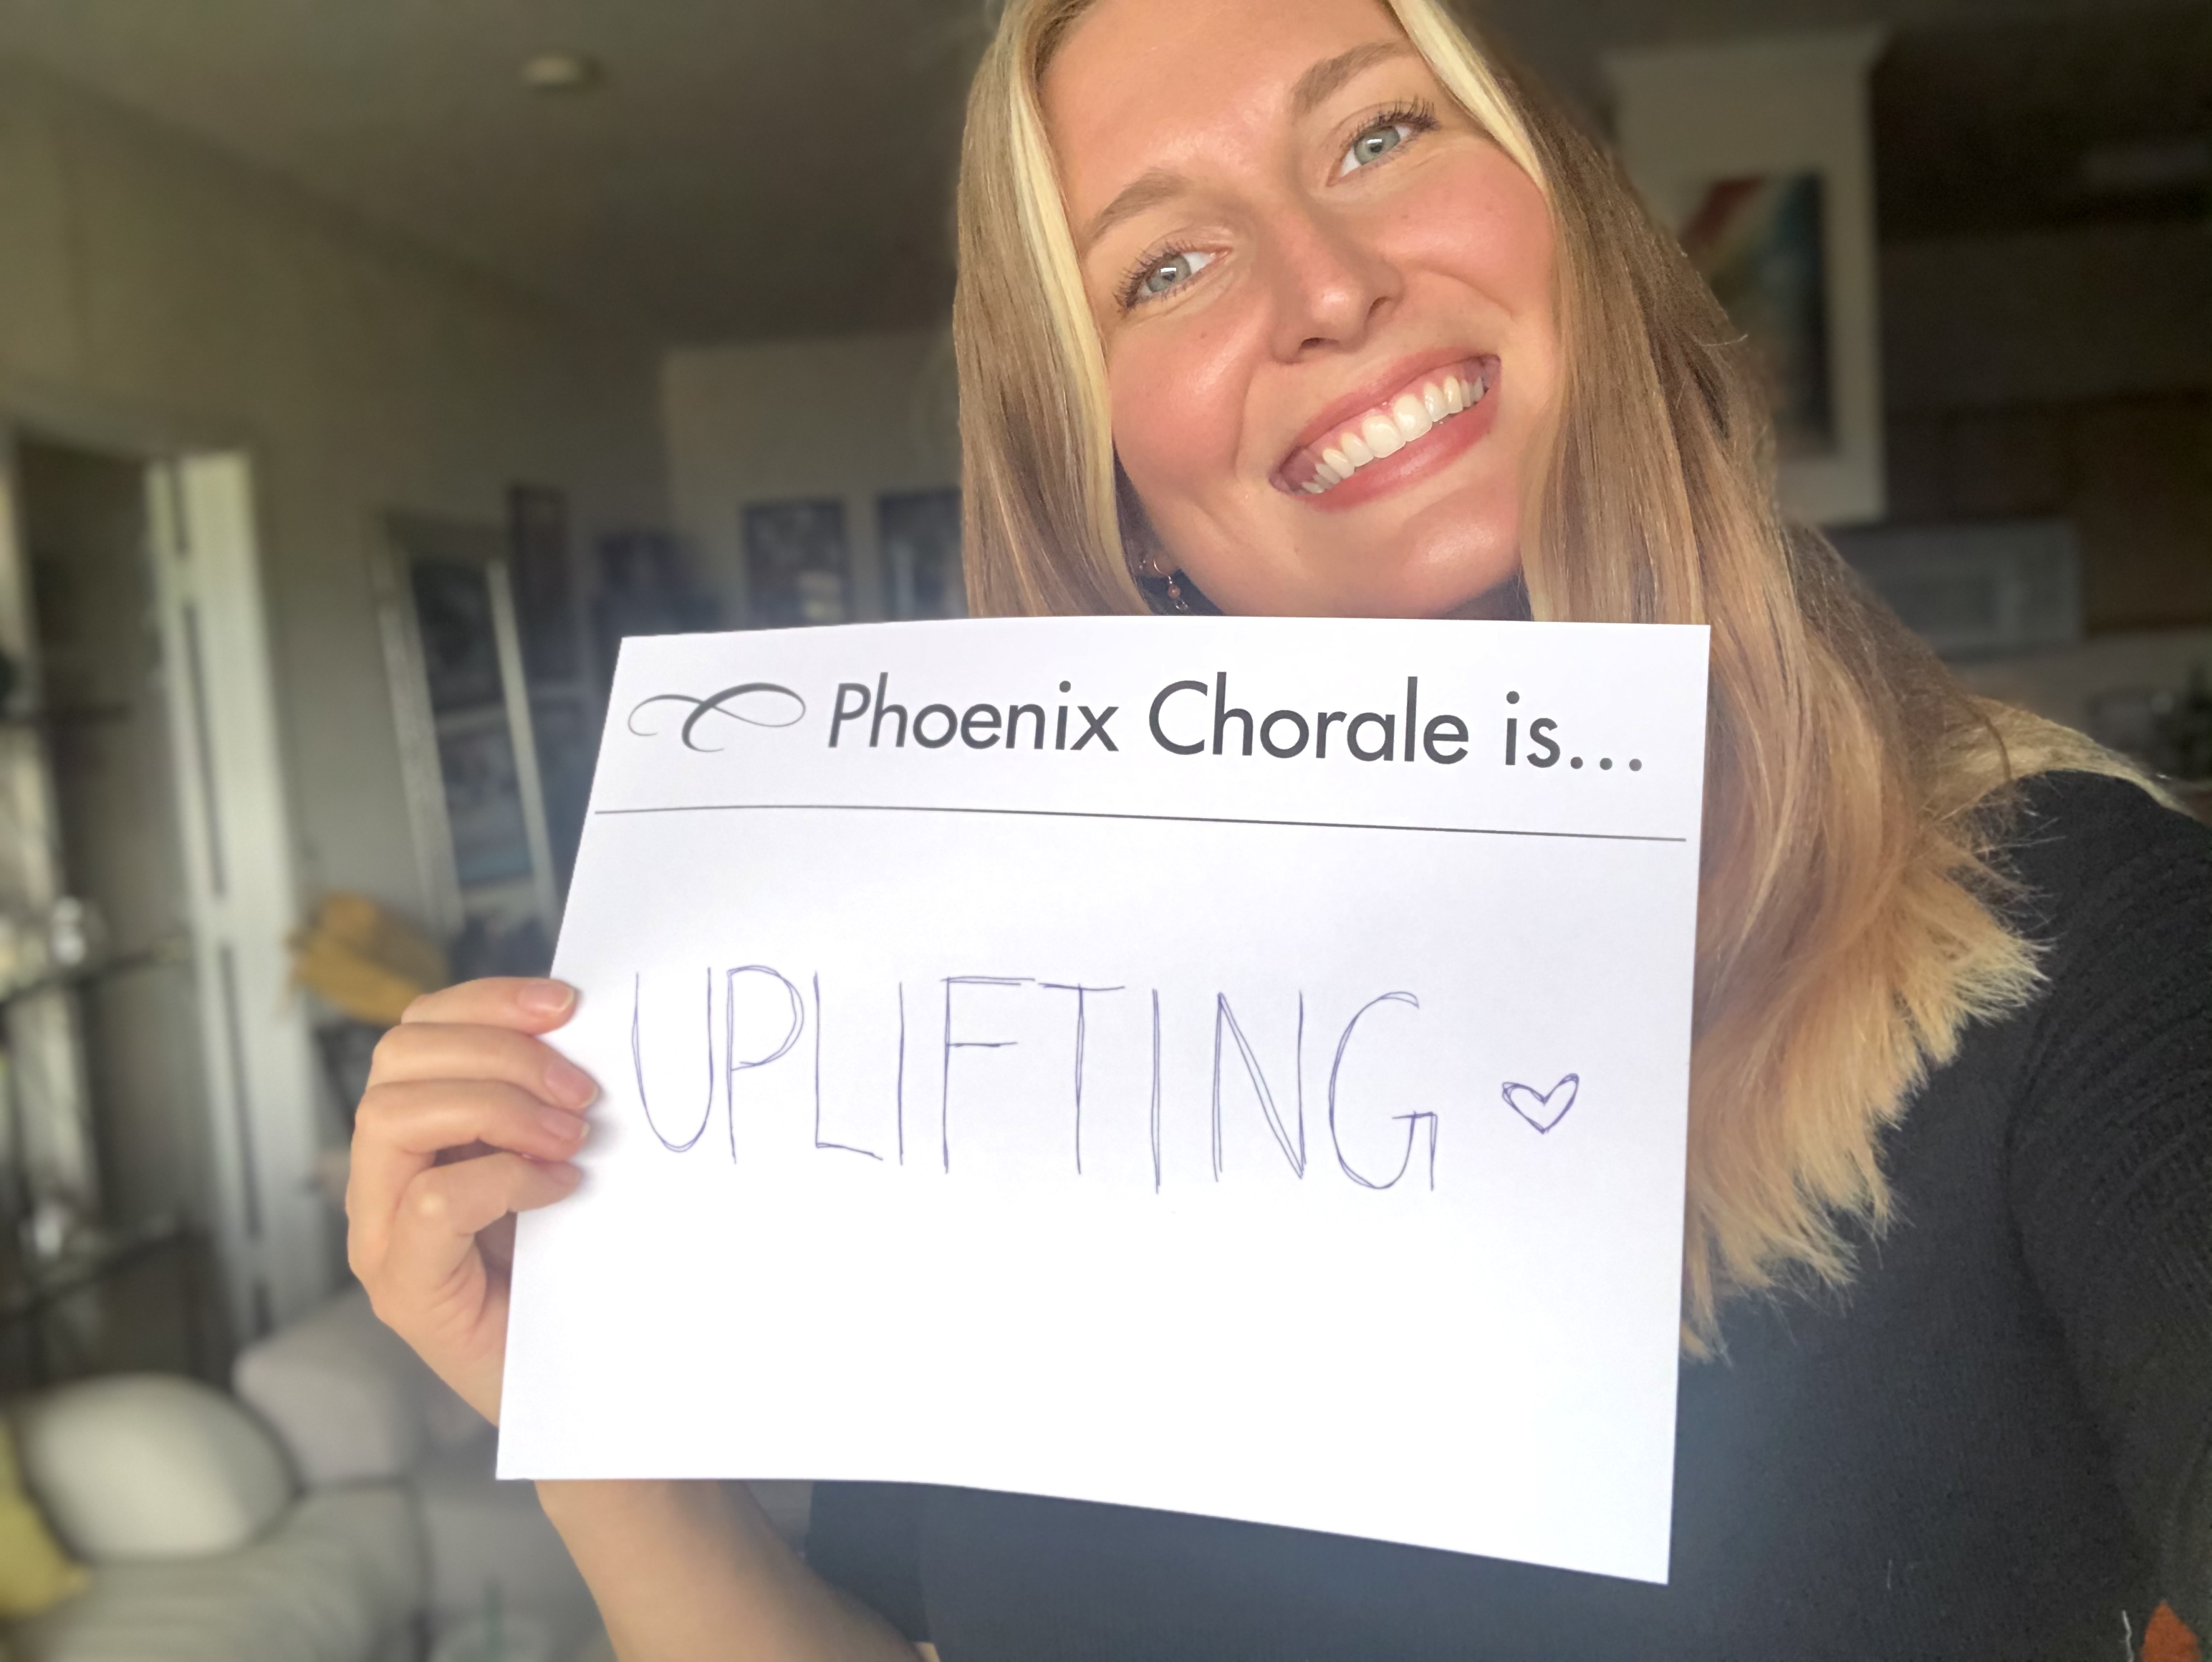 Phoenix Chorale is uplifting